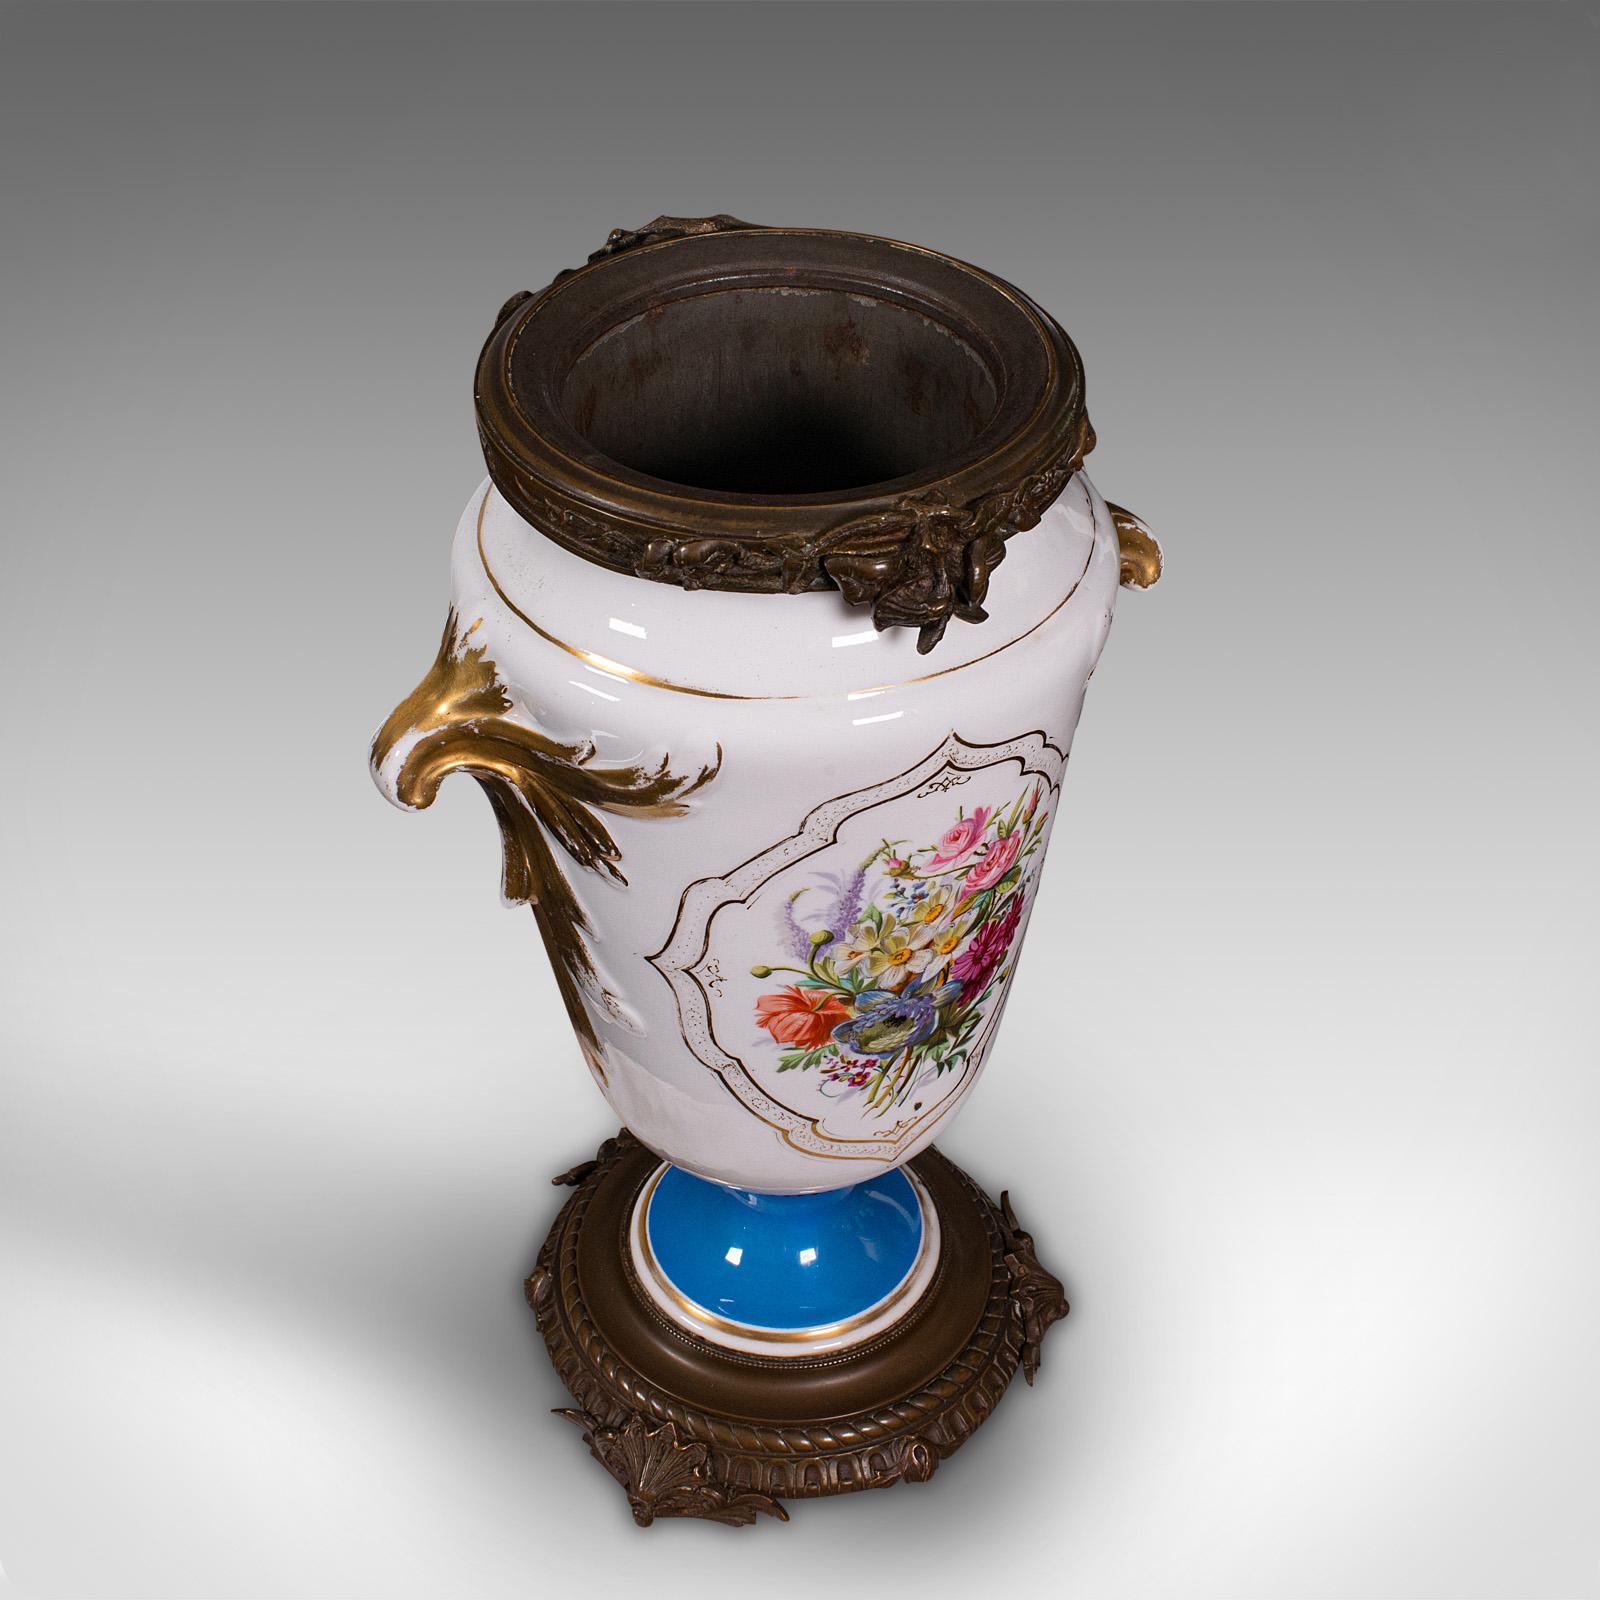 Antique Decorative Jardiniere, French, Ceramic, Display Planter, Vase, Victorian For Sale 3